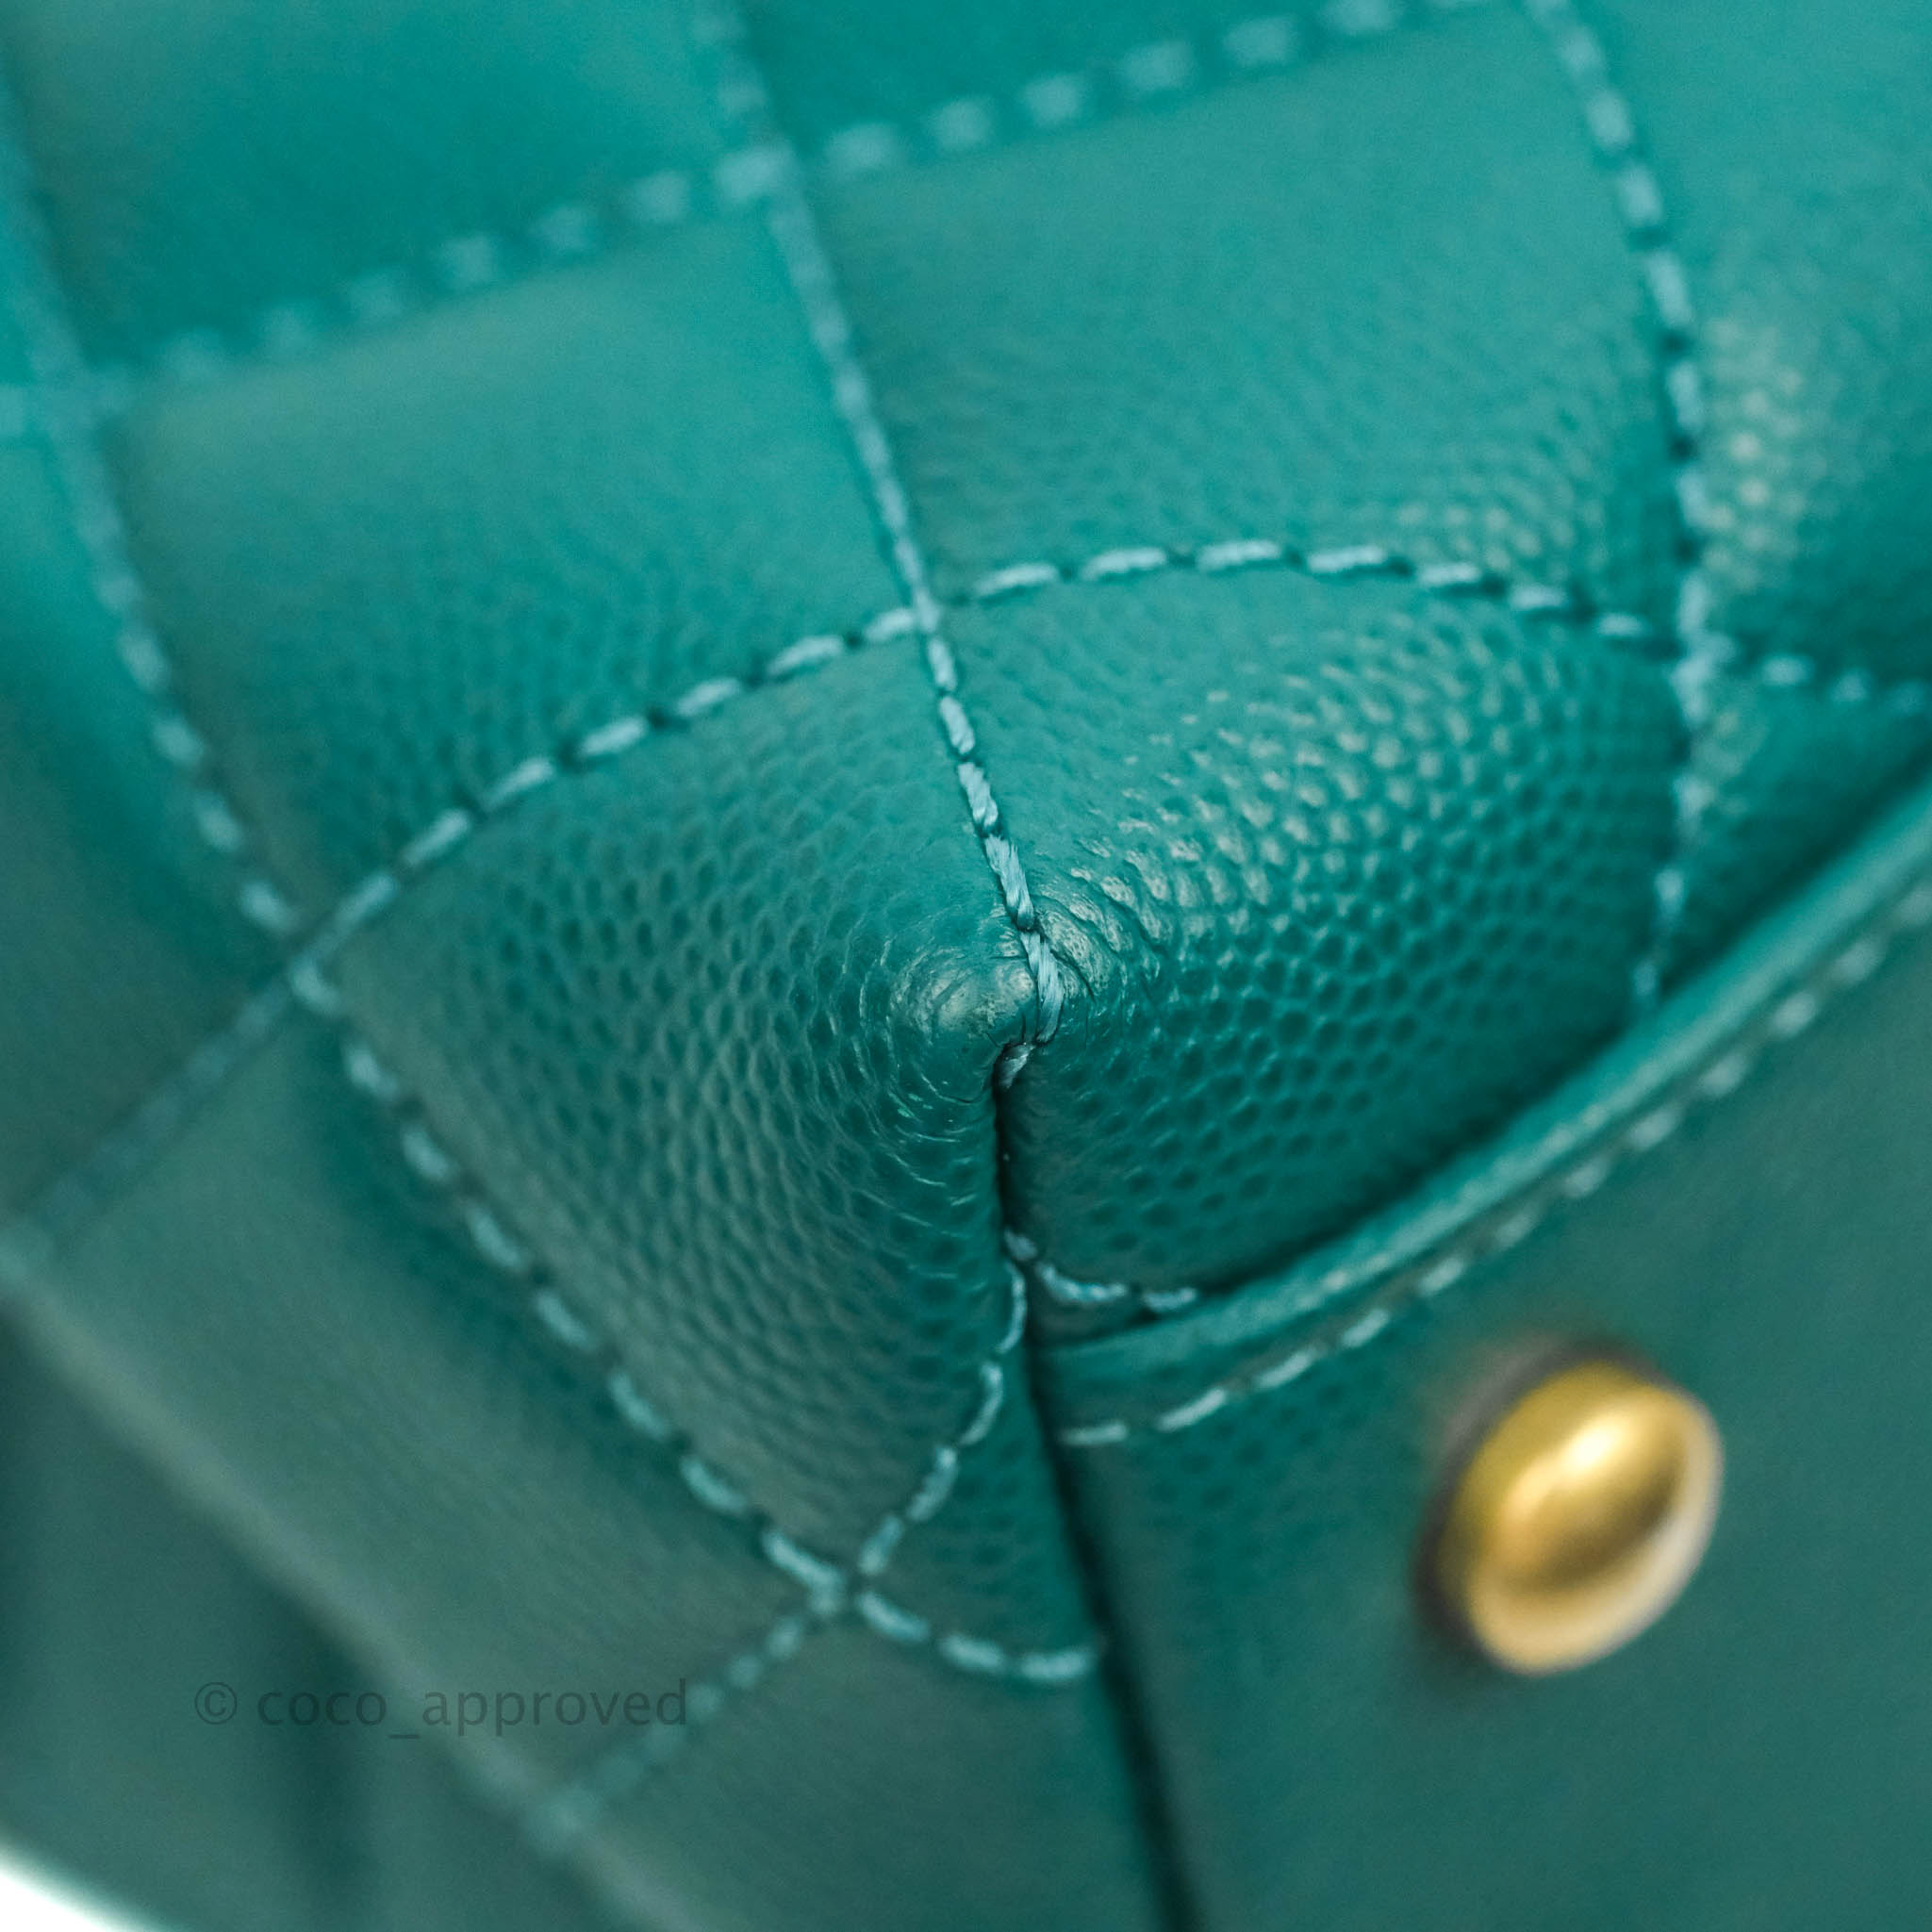 Chanel 18S Emerald Green Small Mini Coco Handle Flap Bag GHW – Boutique  Patina